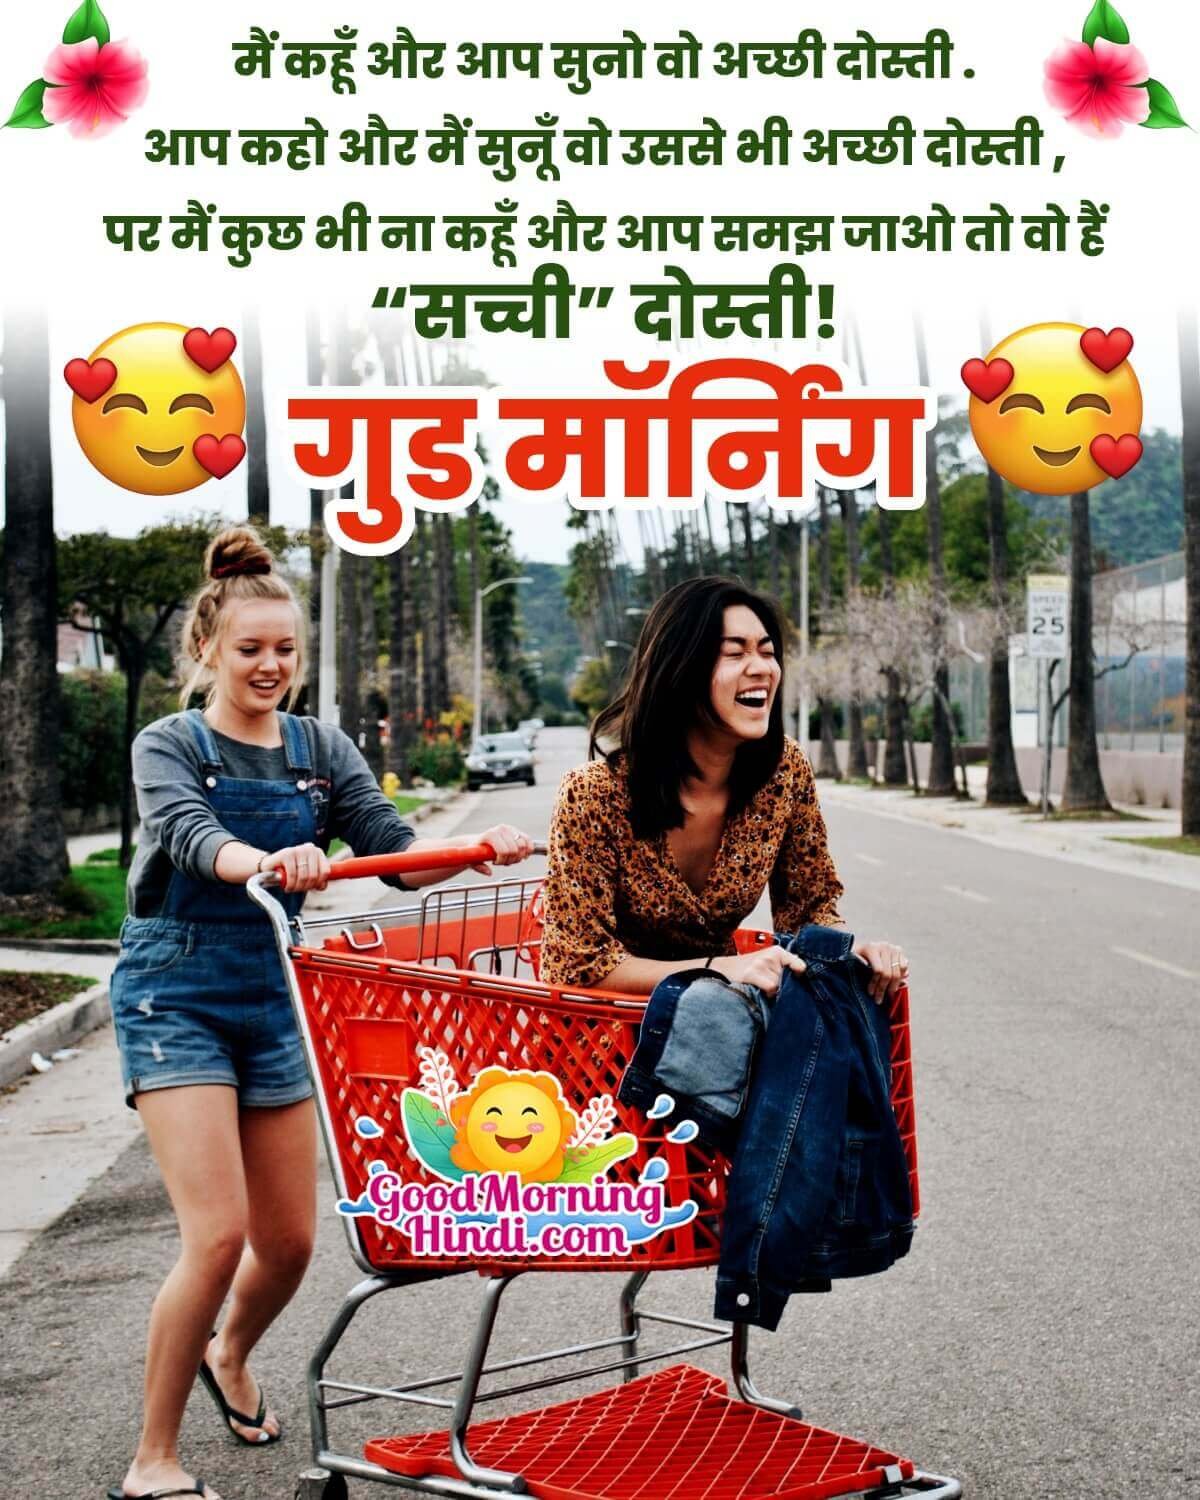 Good Morning Hindi Friendship Shayari For Friends Image